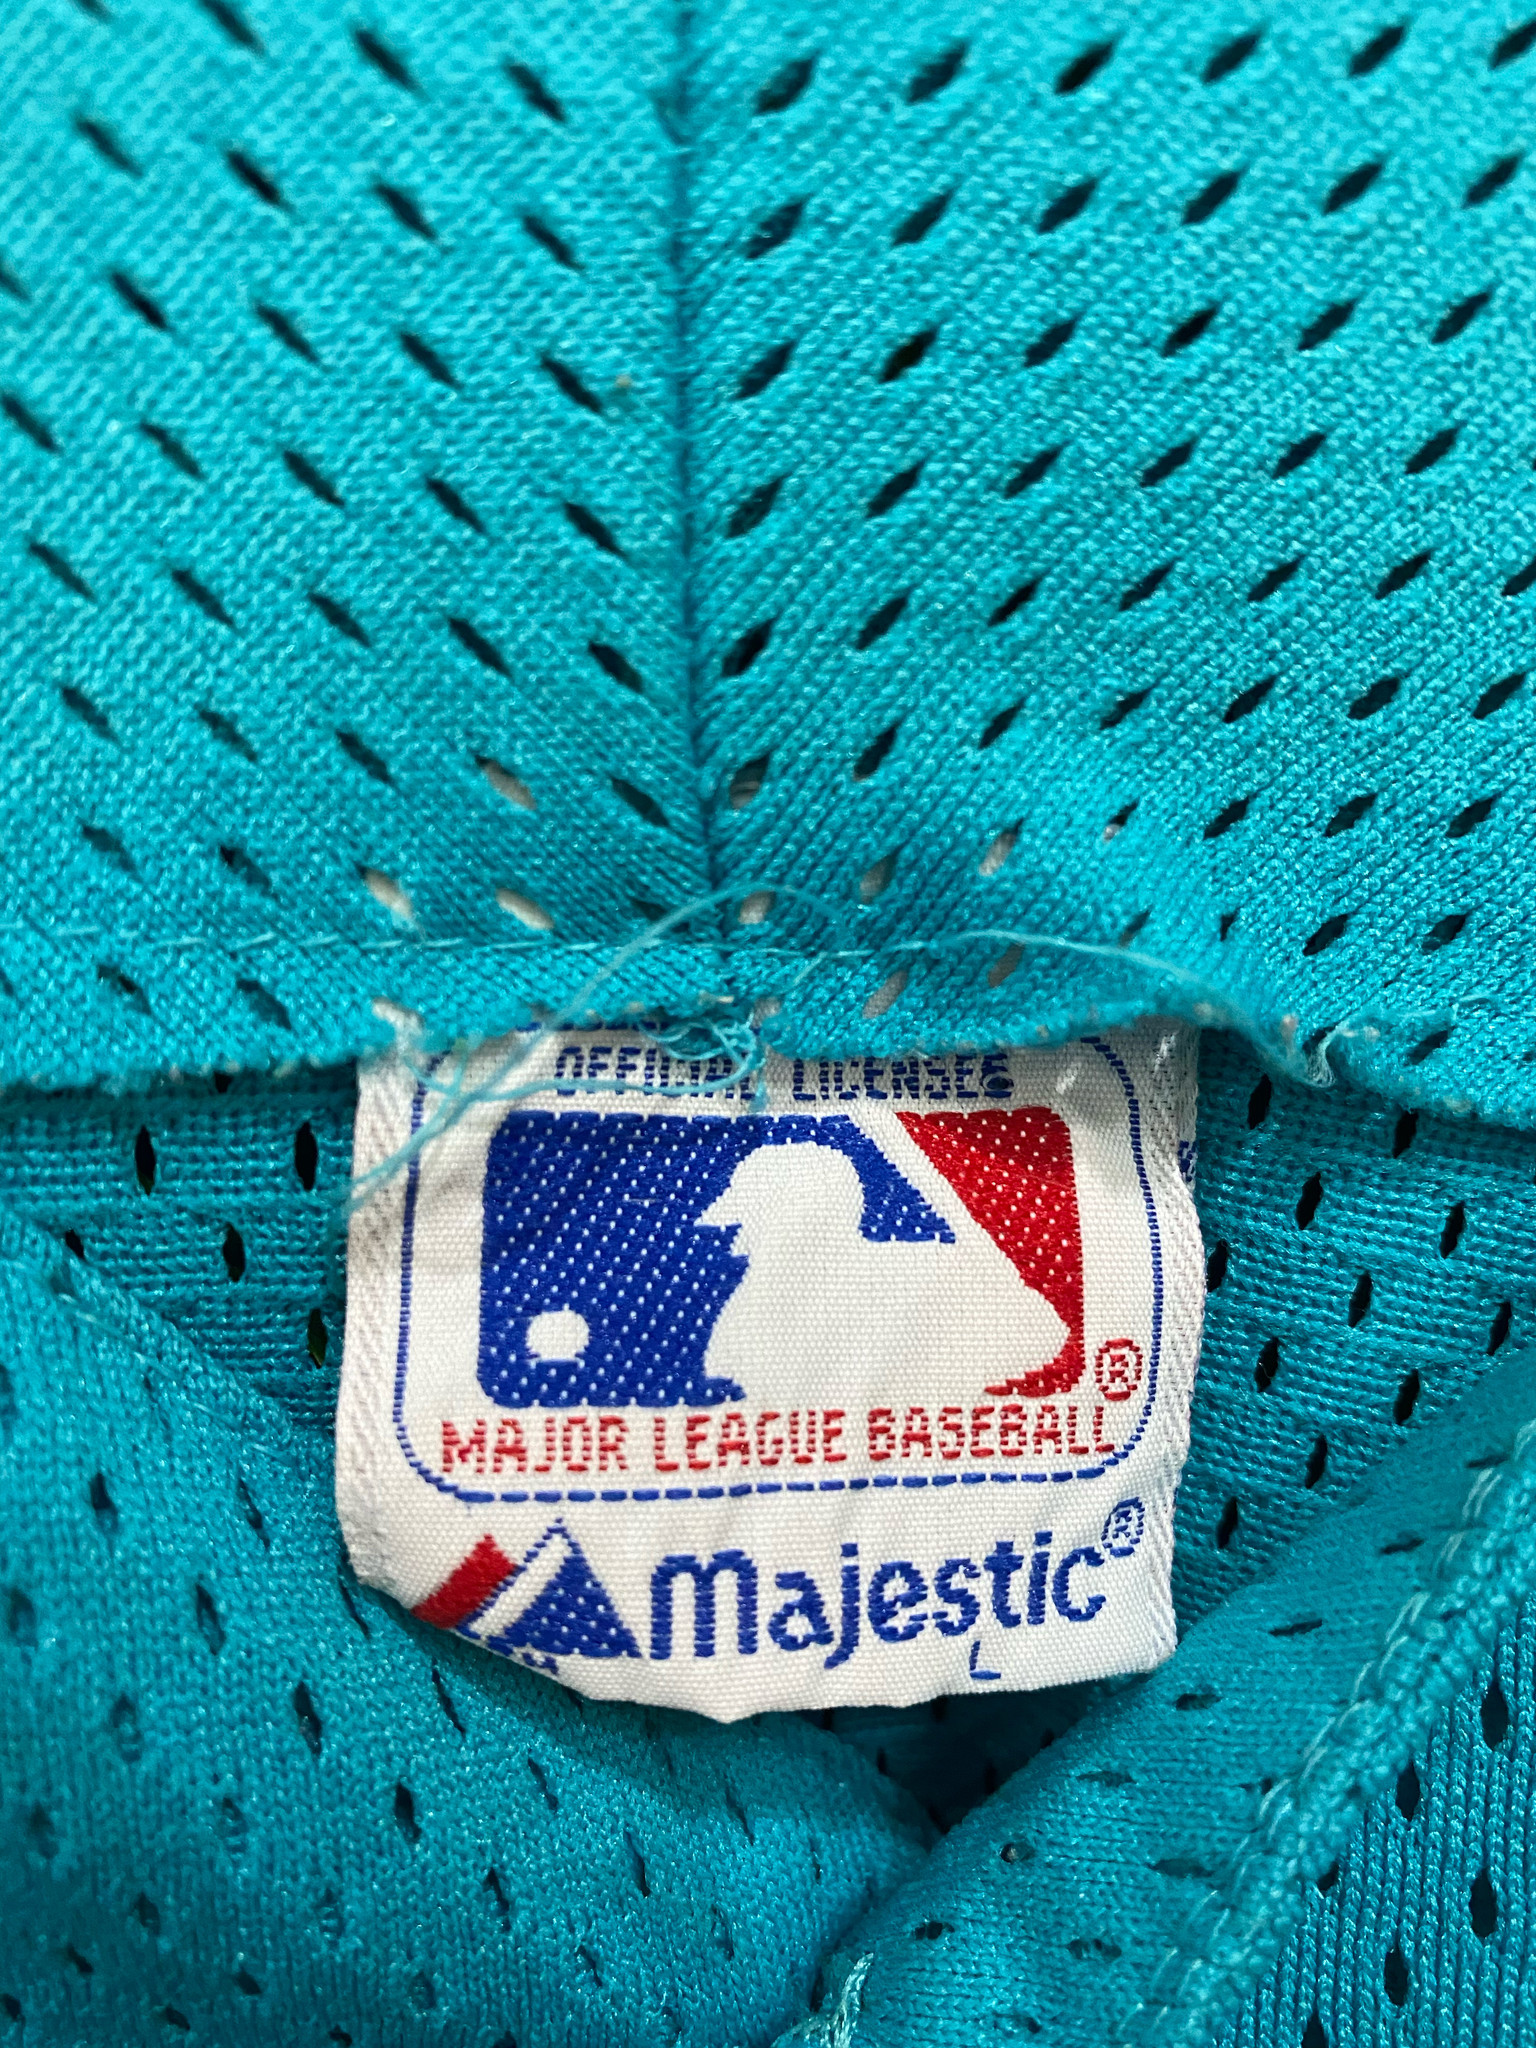 Majestic 90's Florida Marlins Mesh Teal Multi Baseball Jersey MLB